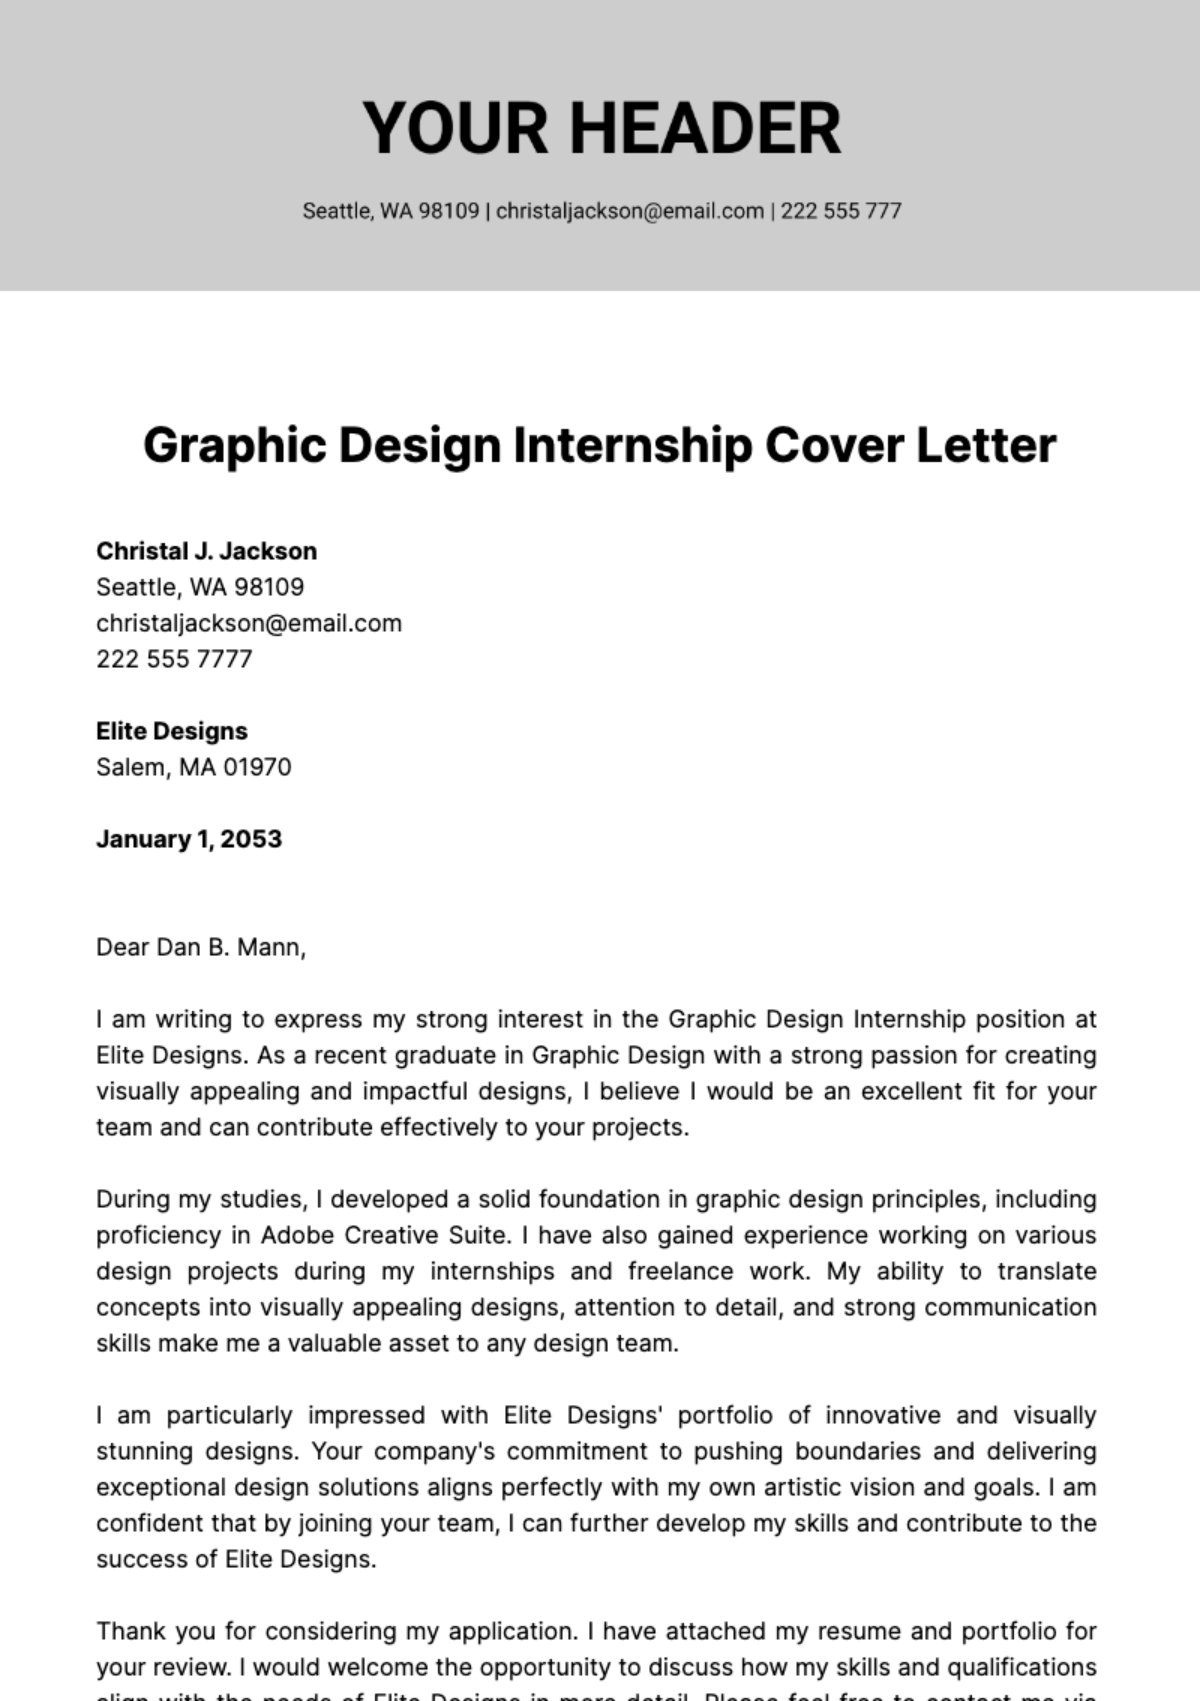 Free Graphic Design Internship Cover Letter  Template